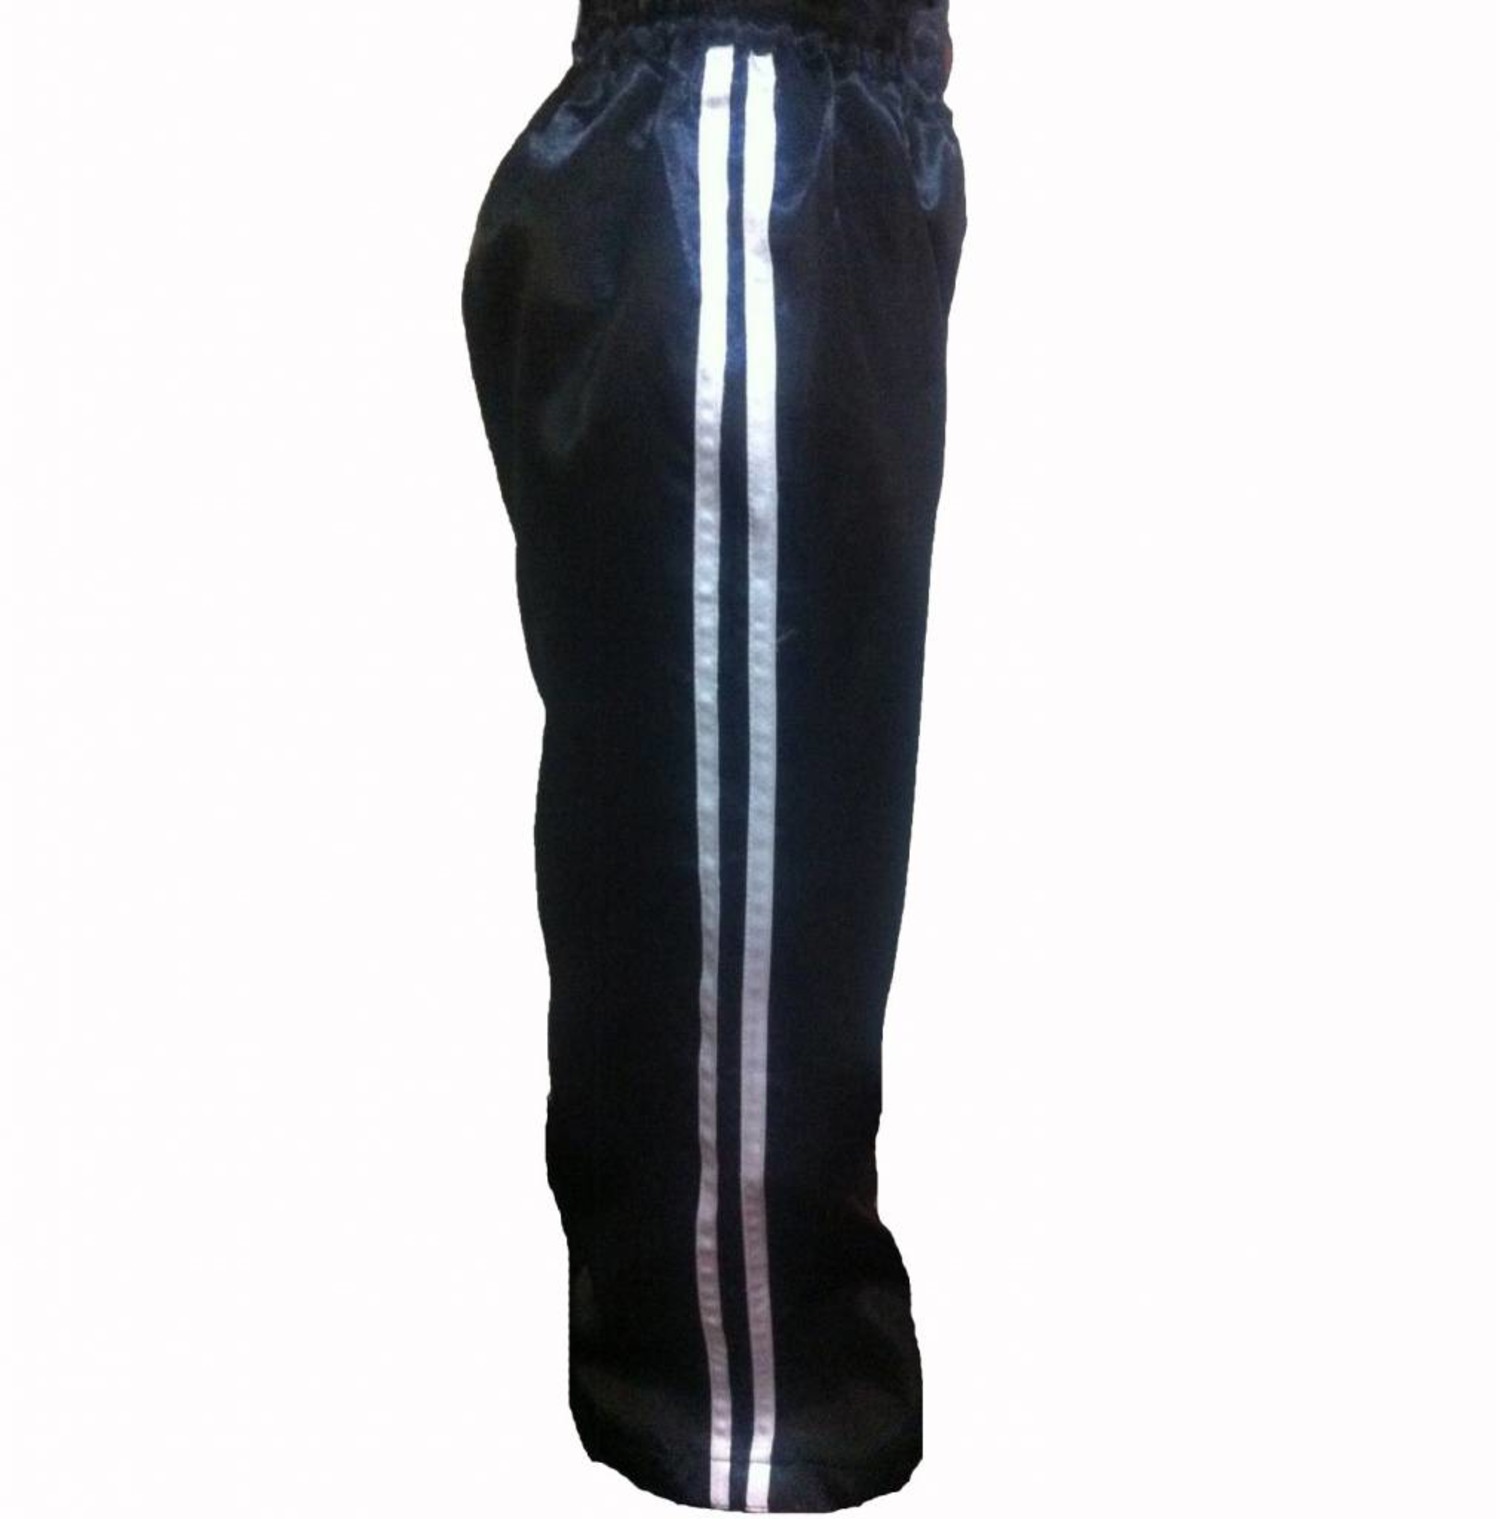 black kickboxing trousers satin with white stripes